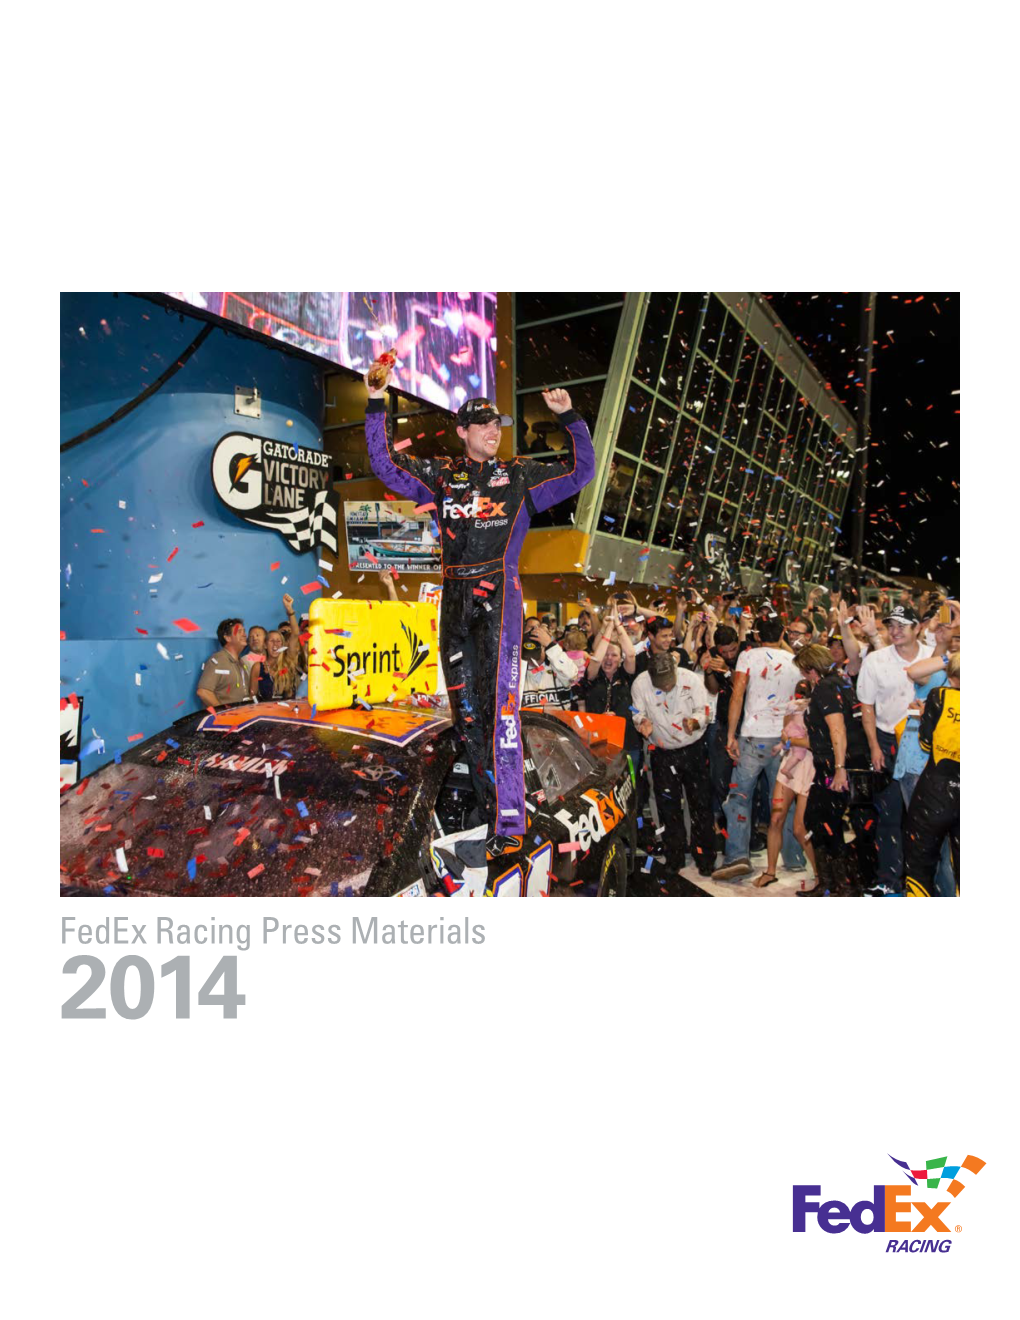 Fedex Racing Press Materials 2014 Corporate Overview